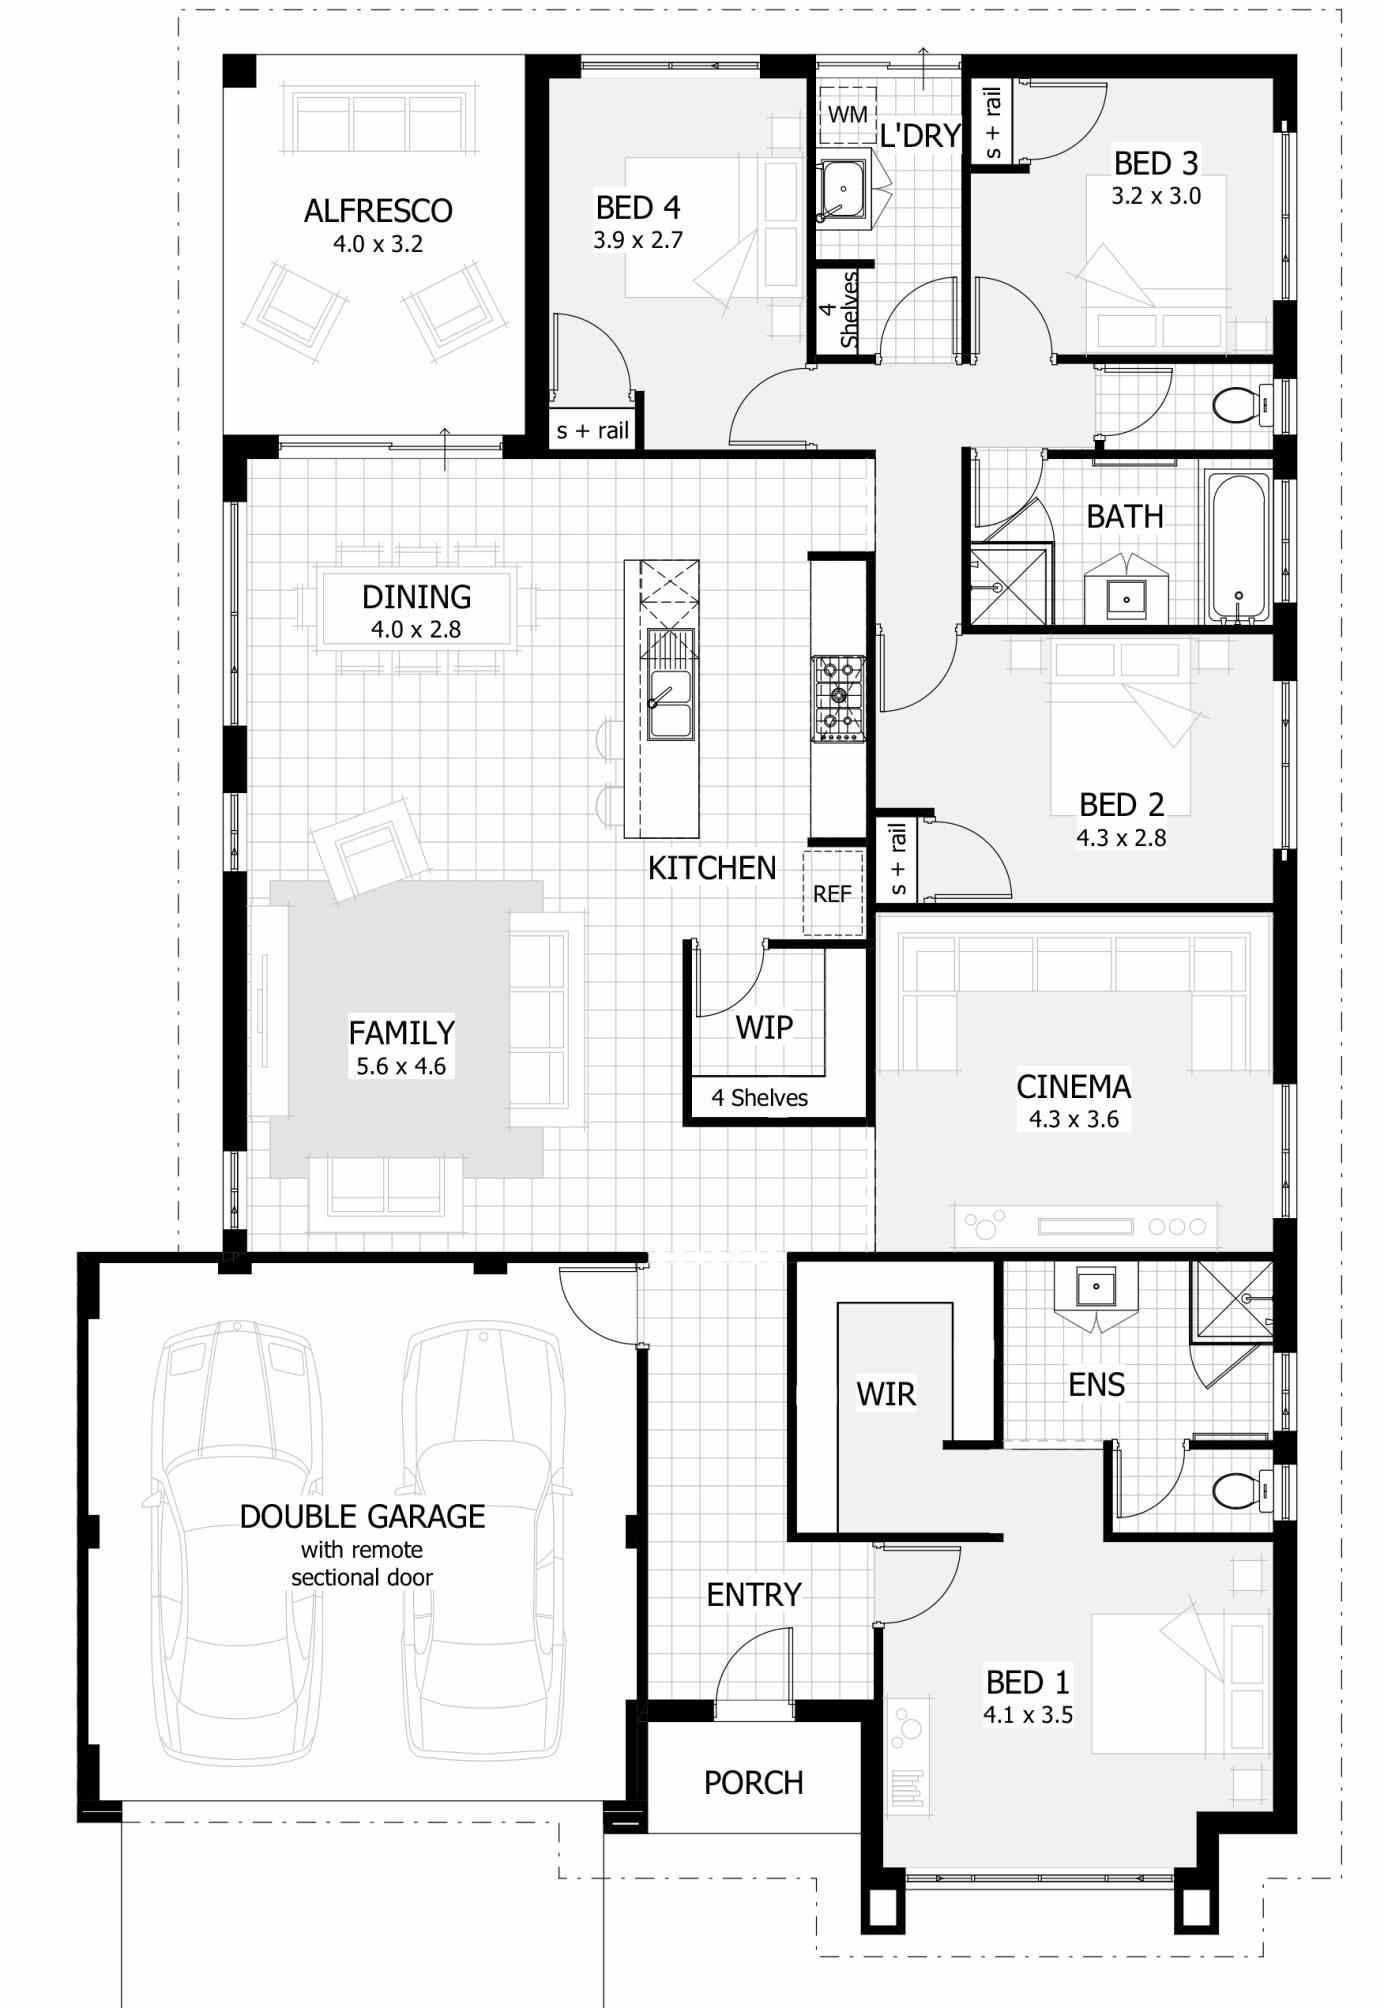 4 Bedroom House Plans Australia 2021